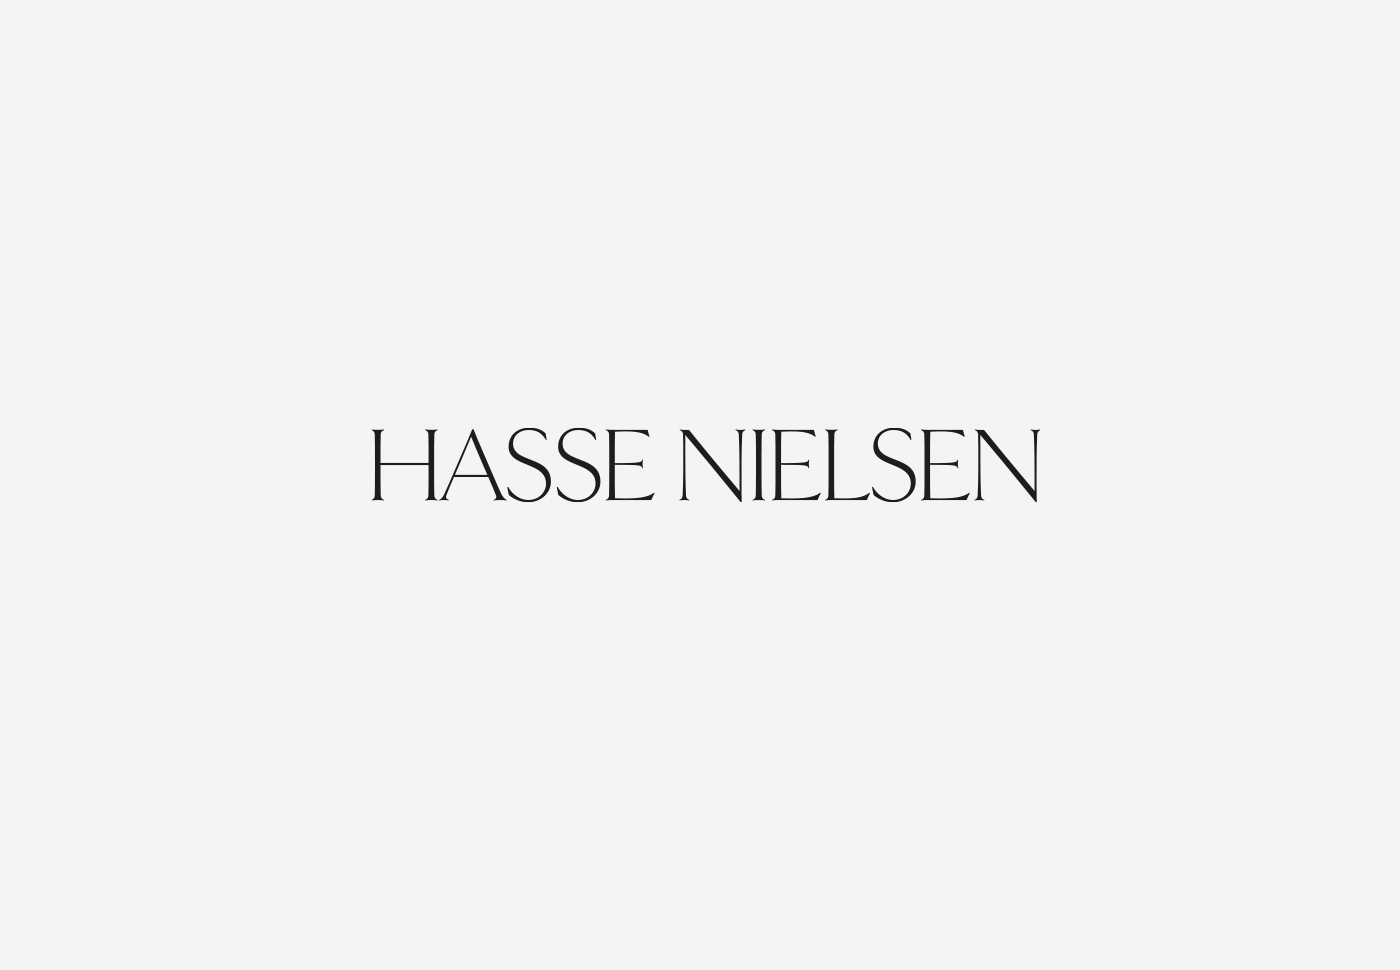 Nielsen Refreshes Brand, Logo Following NielsenIQ Sale